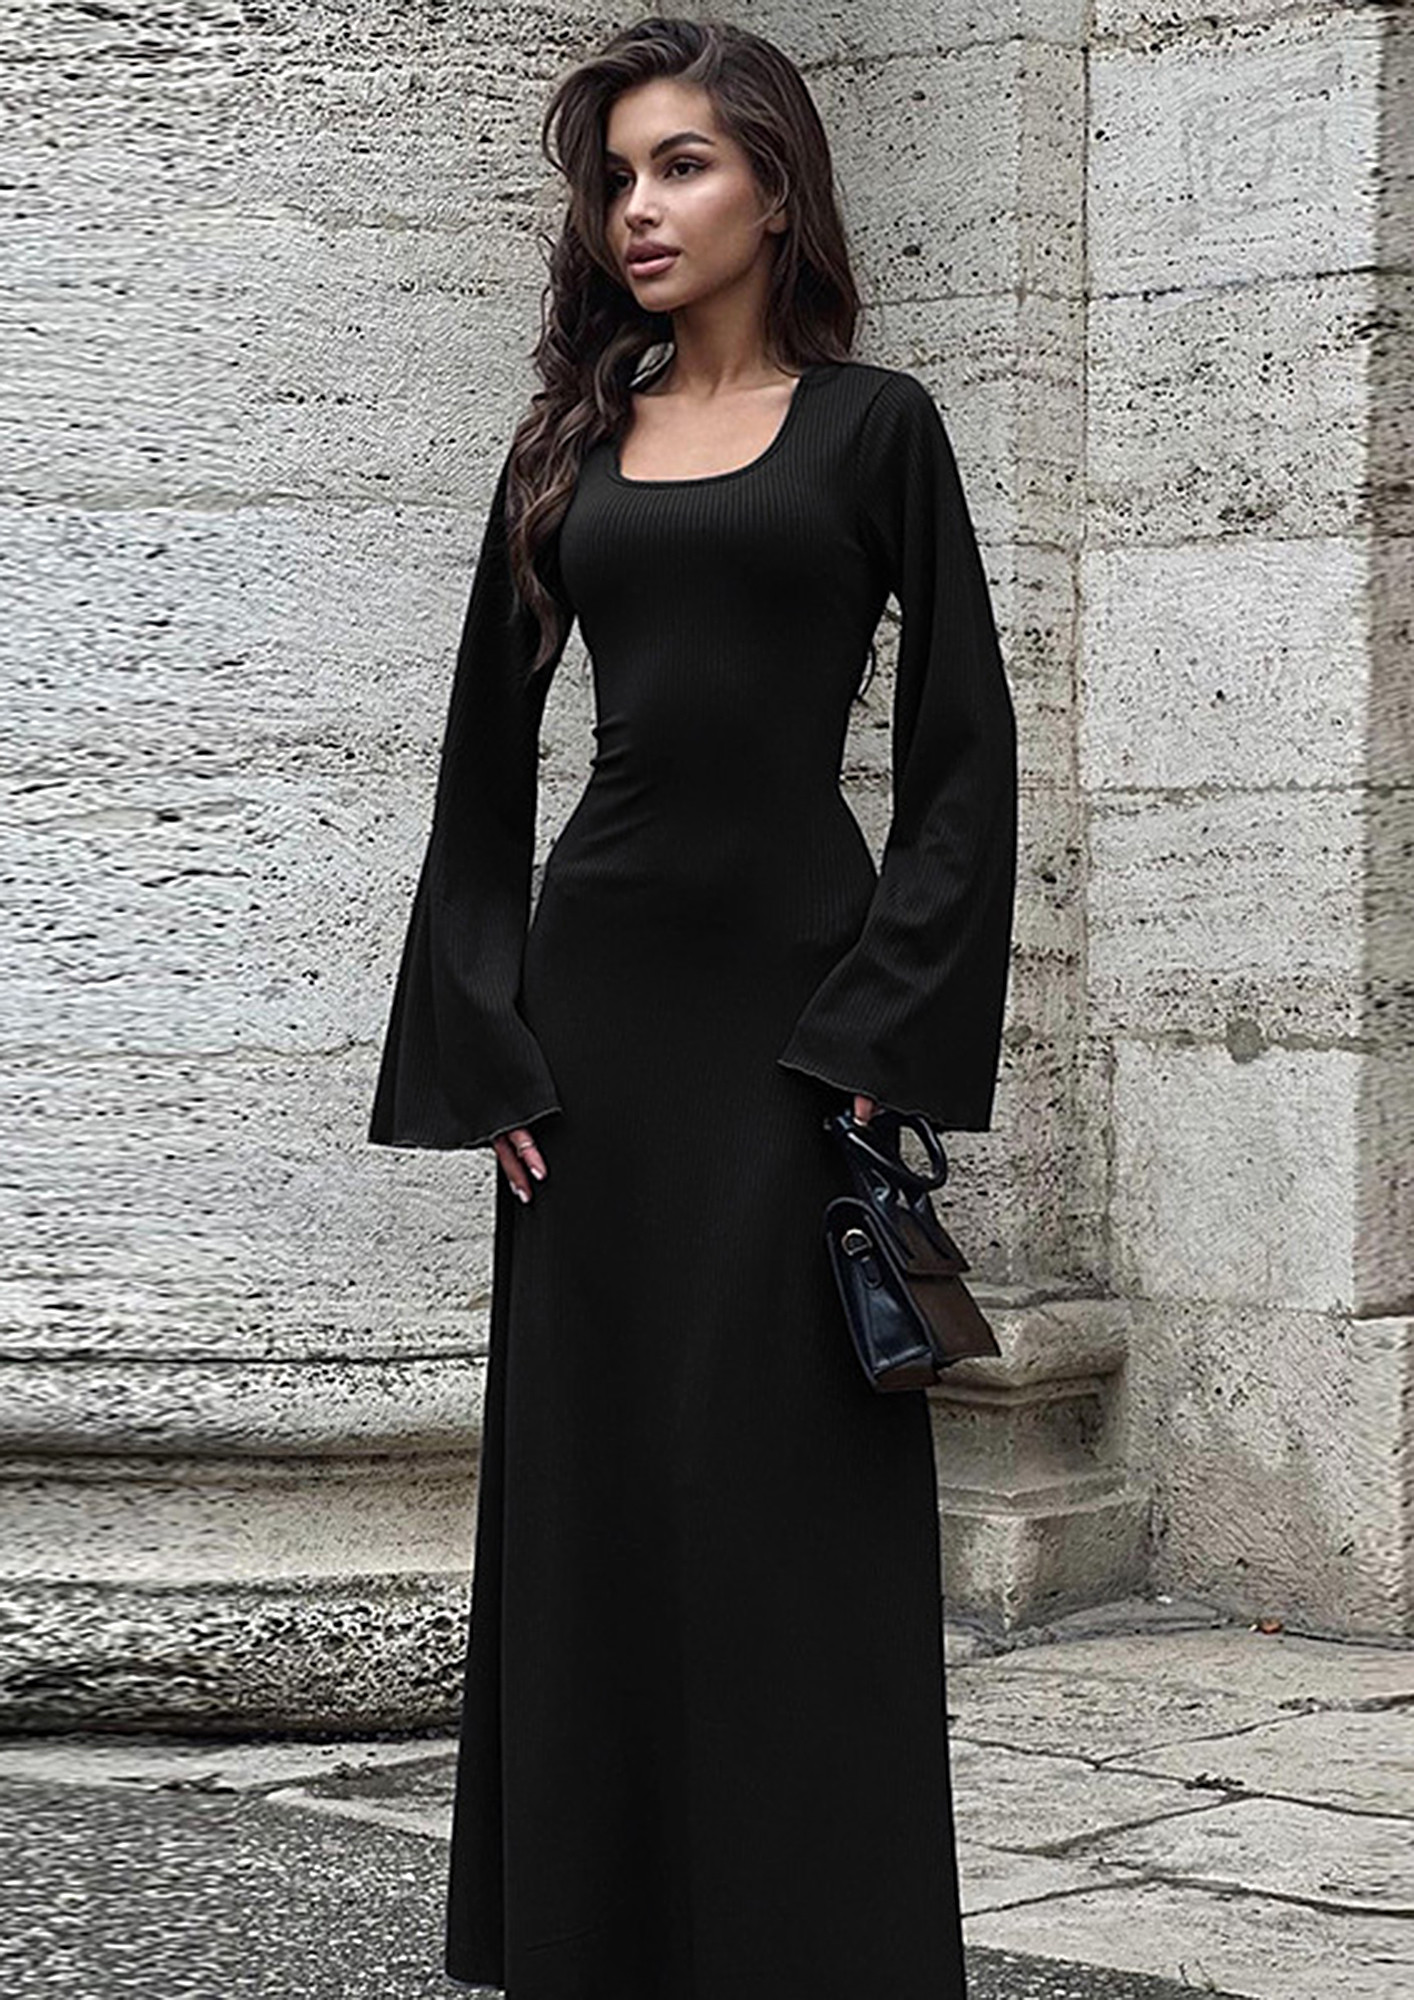 Buy Black Floral Dress Online - RK India Store View